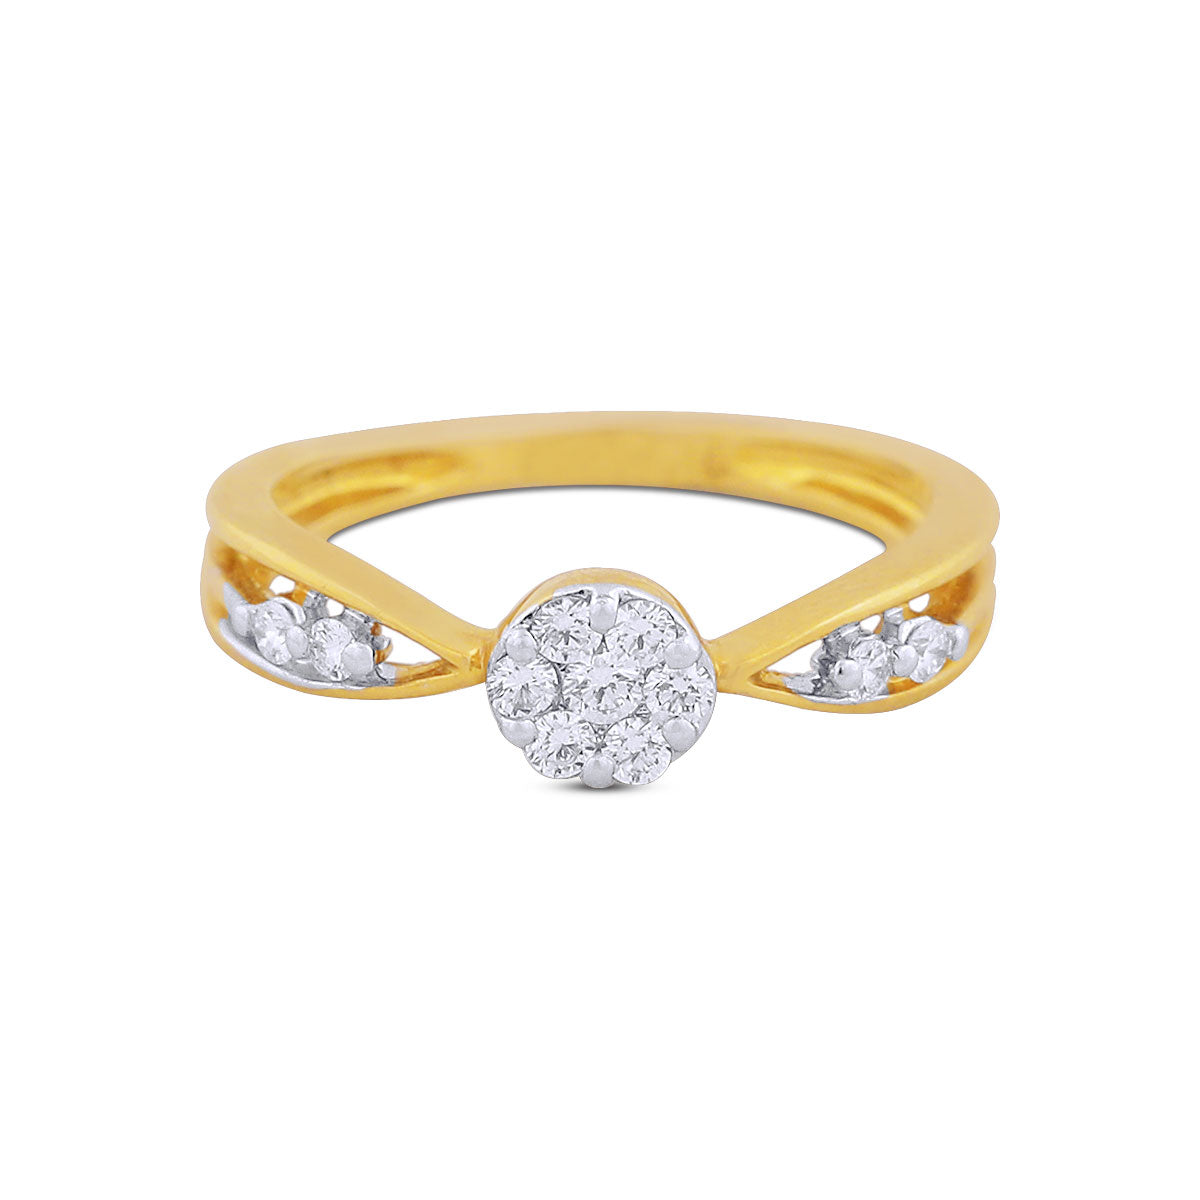 Buy Simplistic 22 Karat Yellow Gold Finger Ring at Best Price | Tanishq UAE